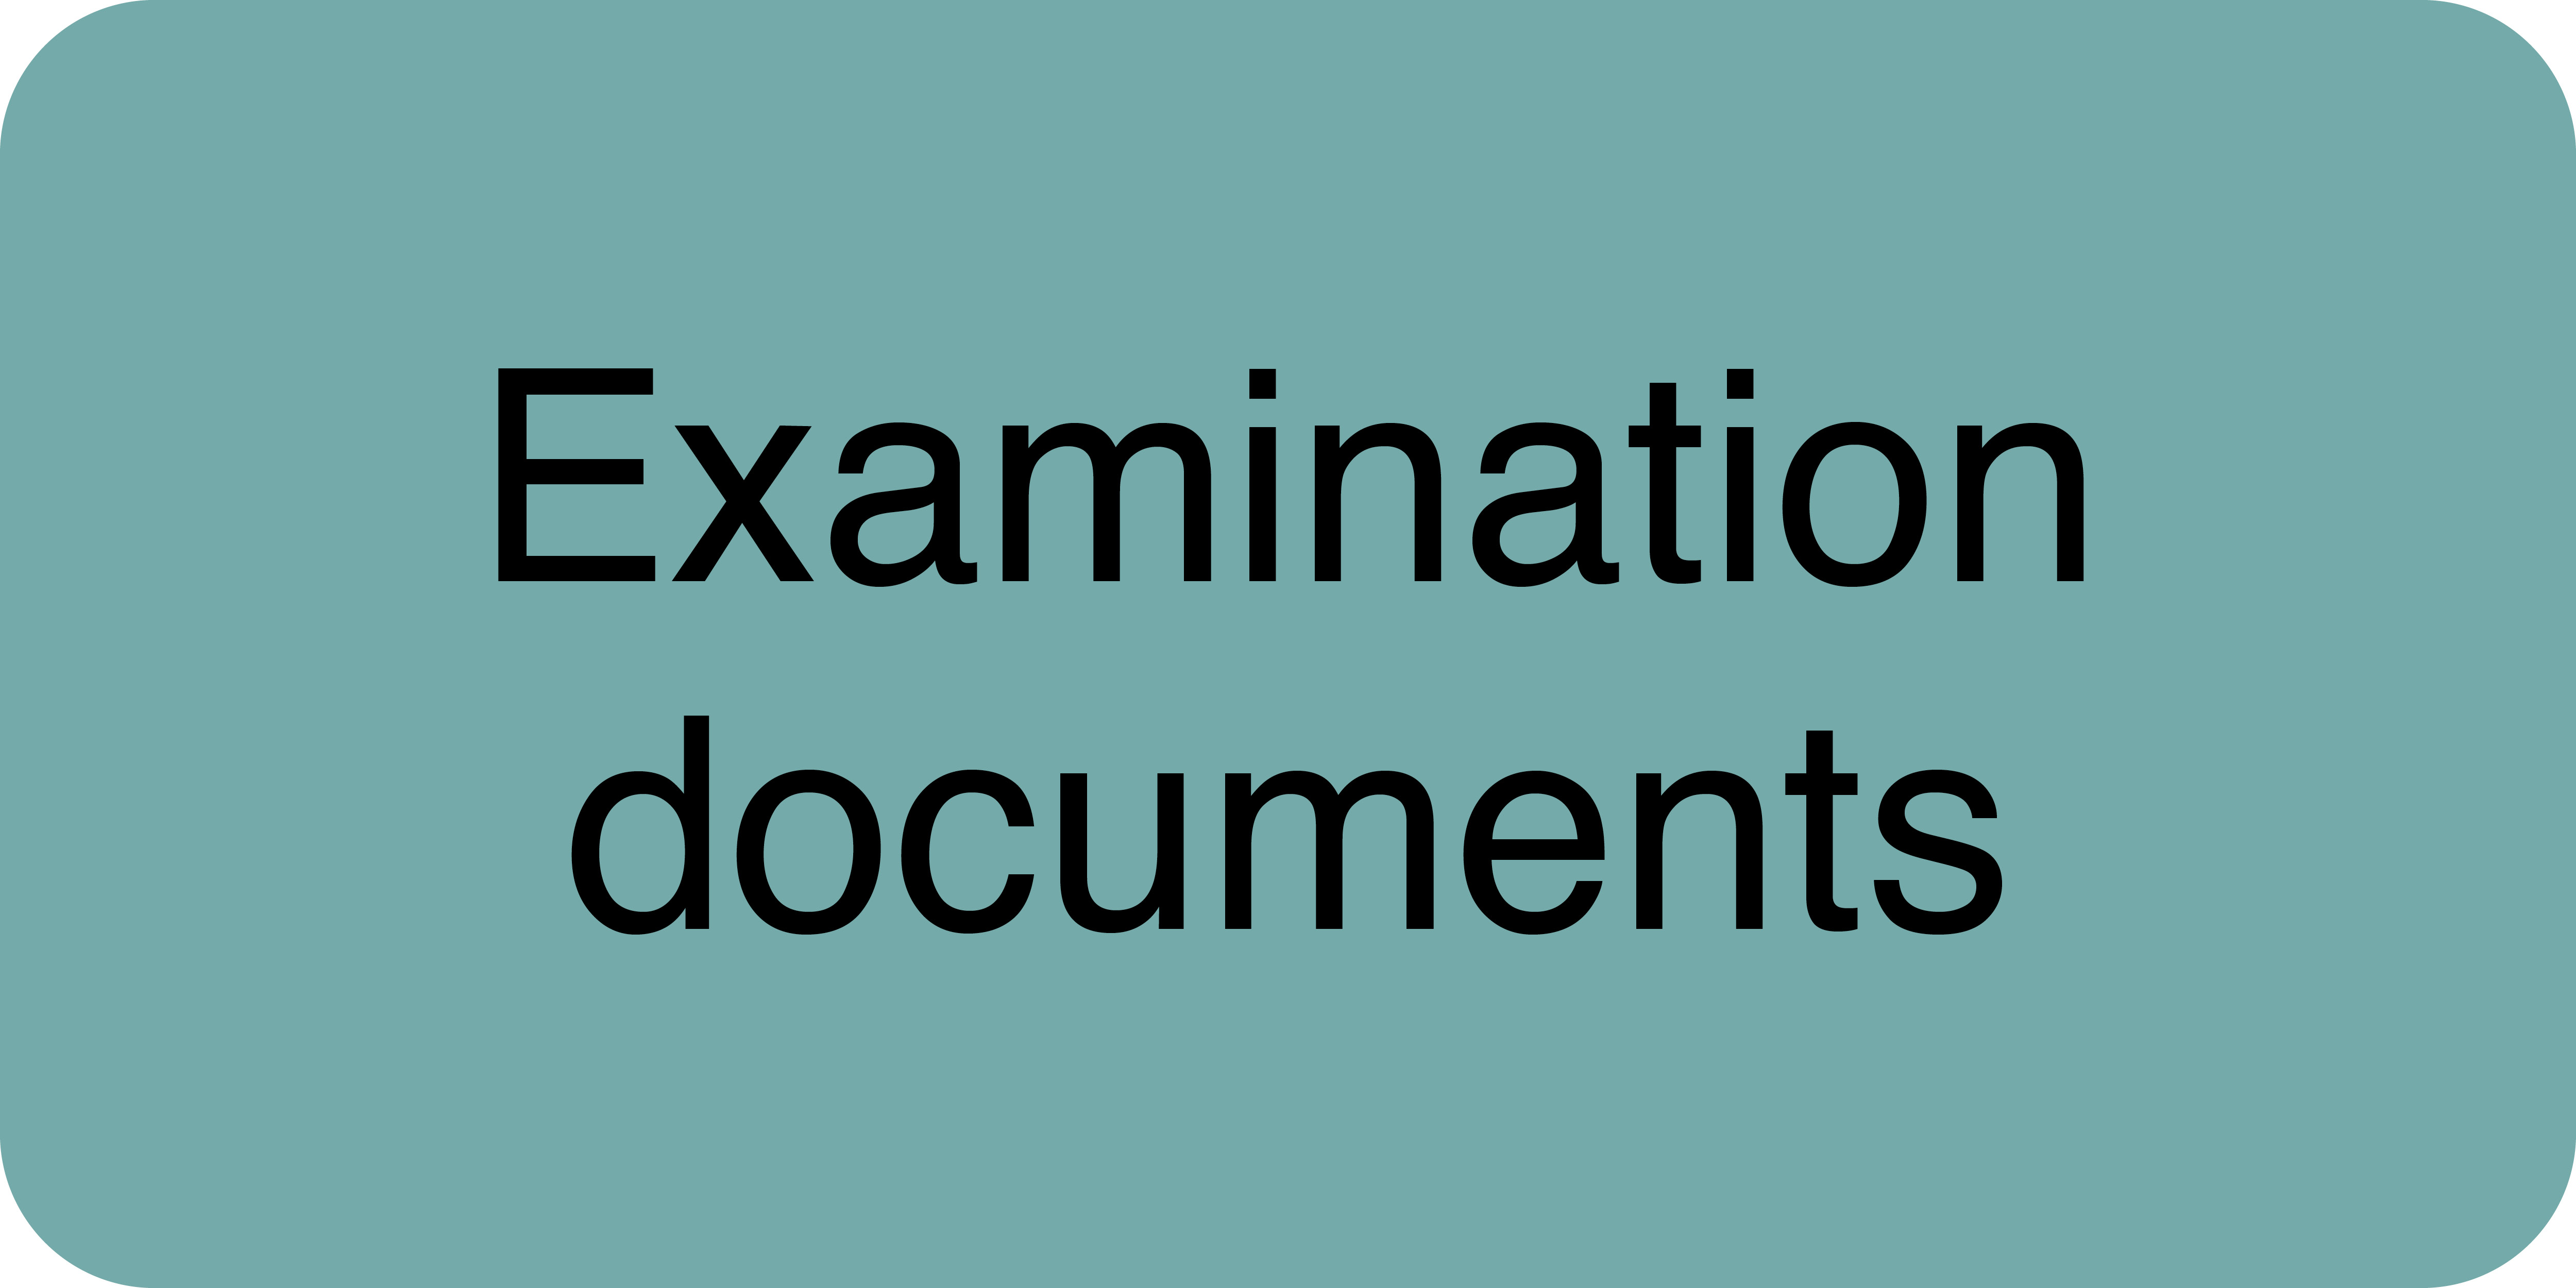 Examination documents